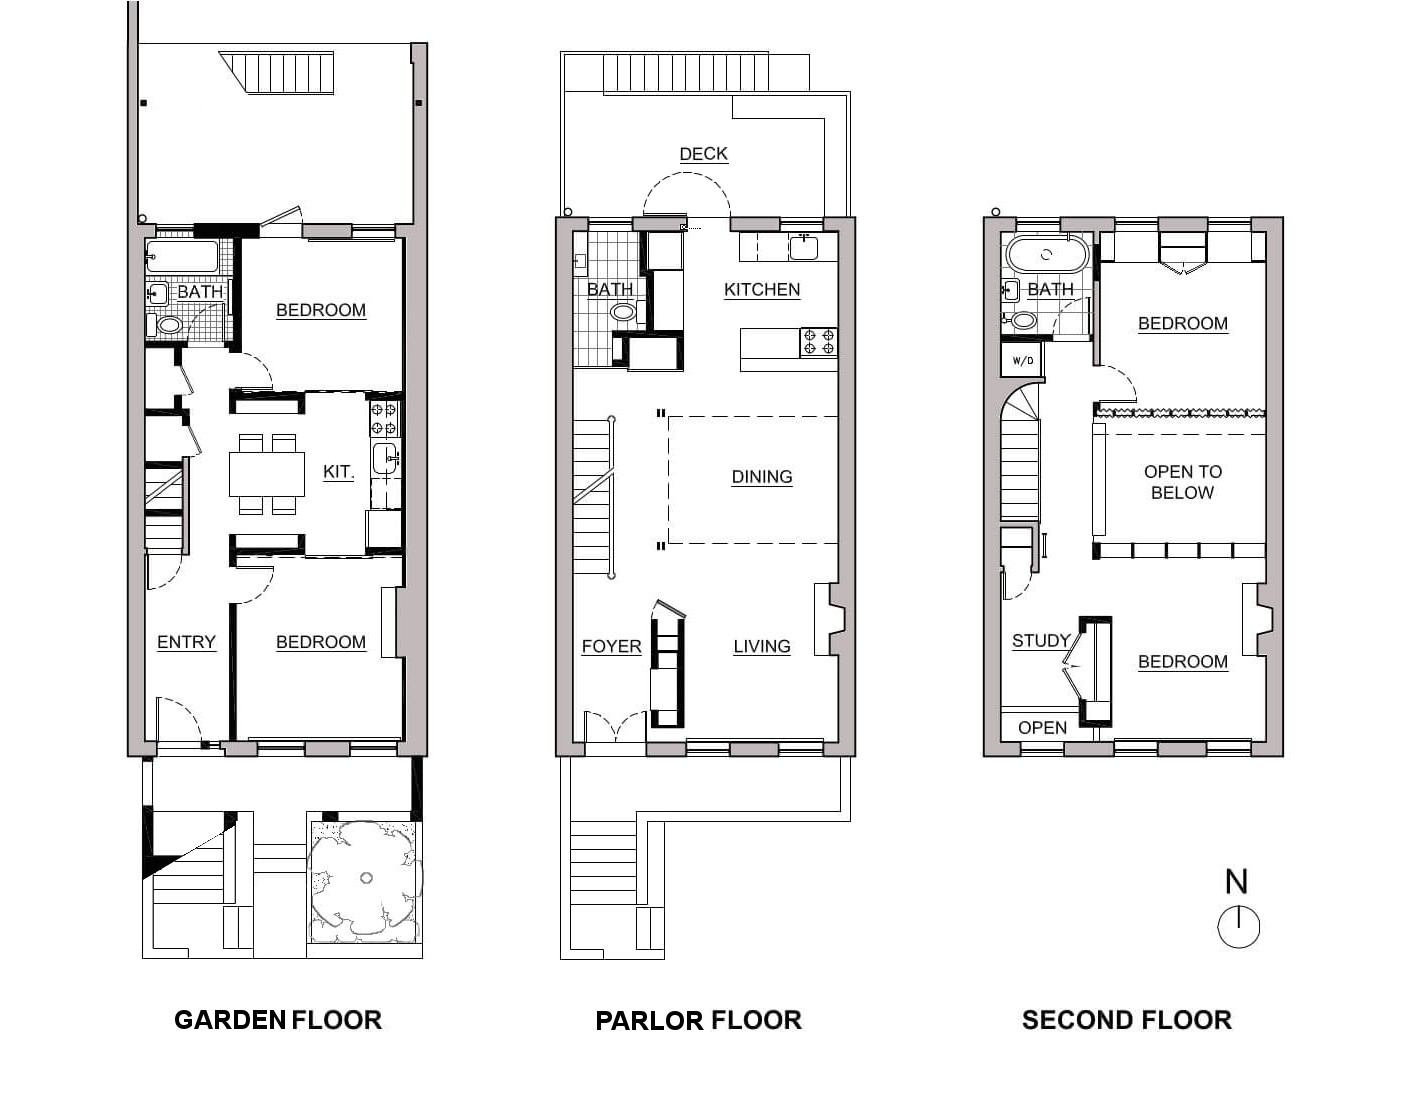 brownstone row house floor plans